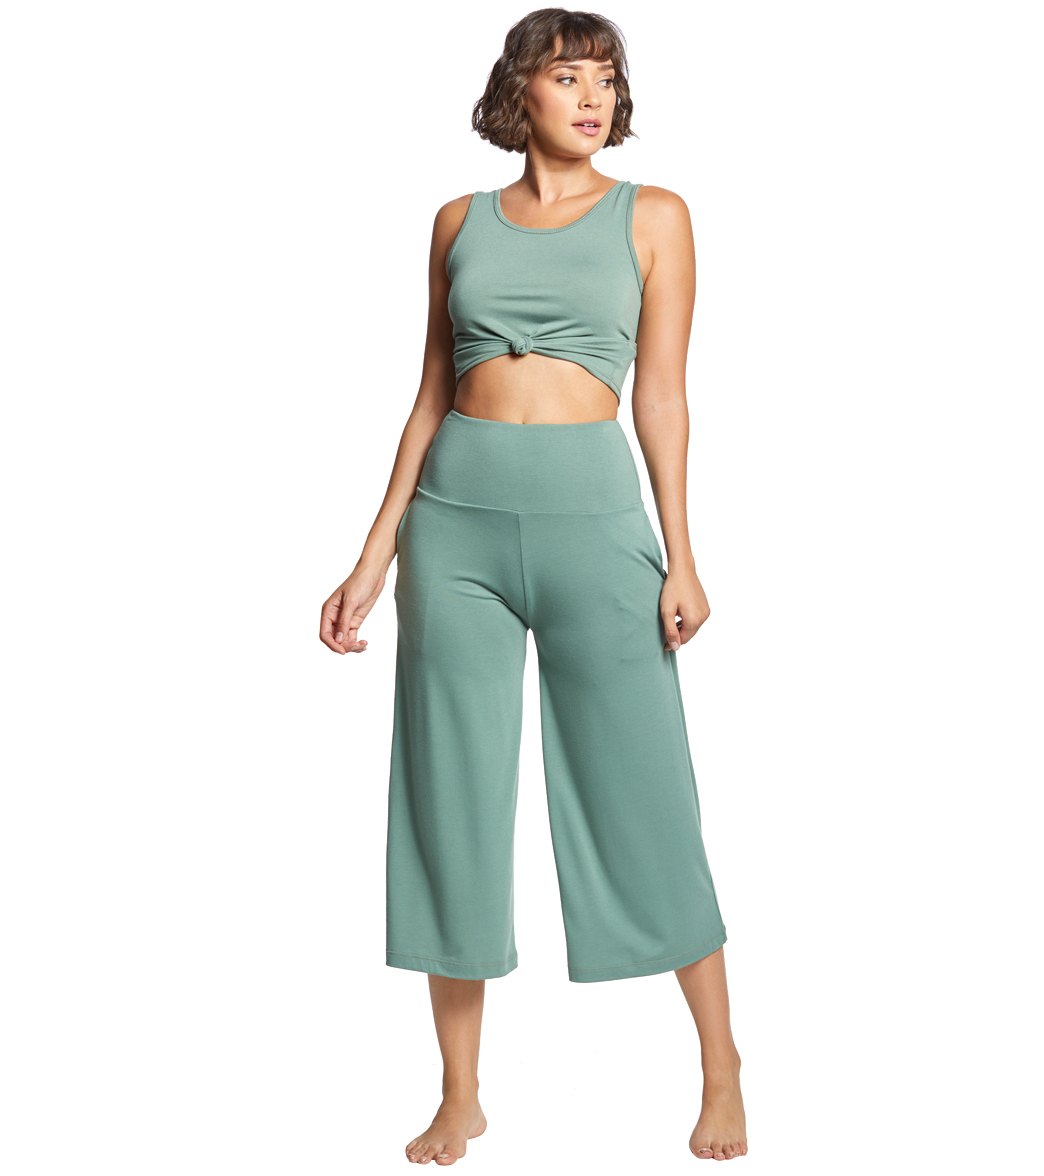 Onzie, Pants & Jumpsuits, Onzie Space Jewels Capri Leggings Size Medium  Large Athletic Yoga Pants Cropped